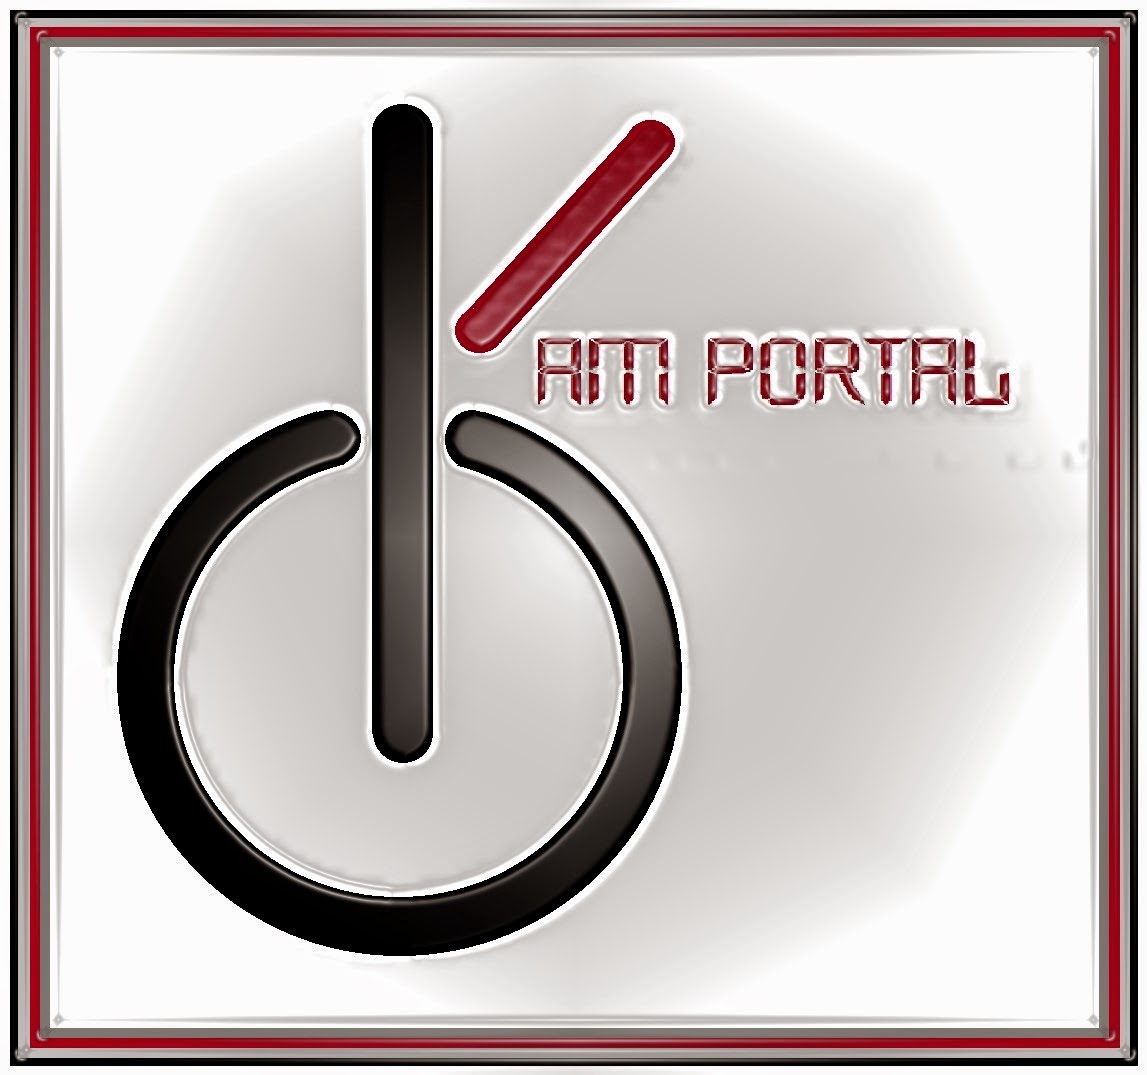 KAM Portal